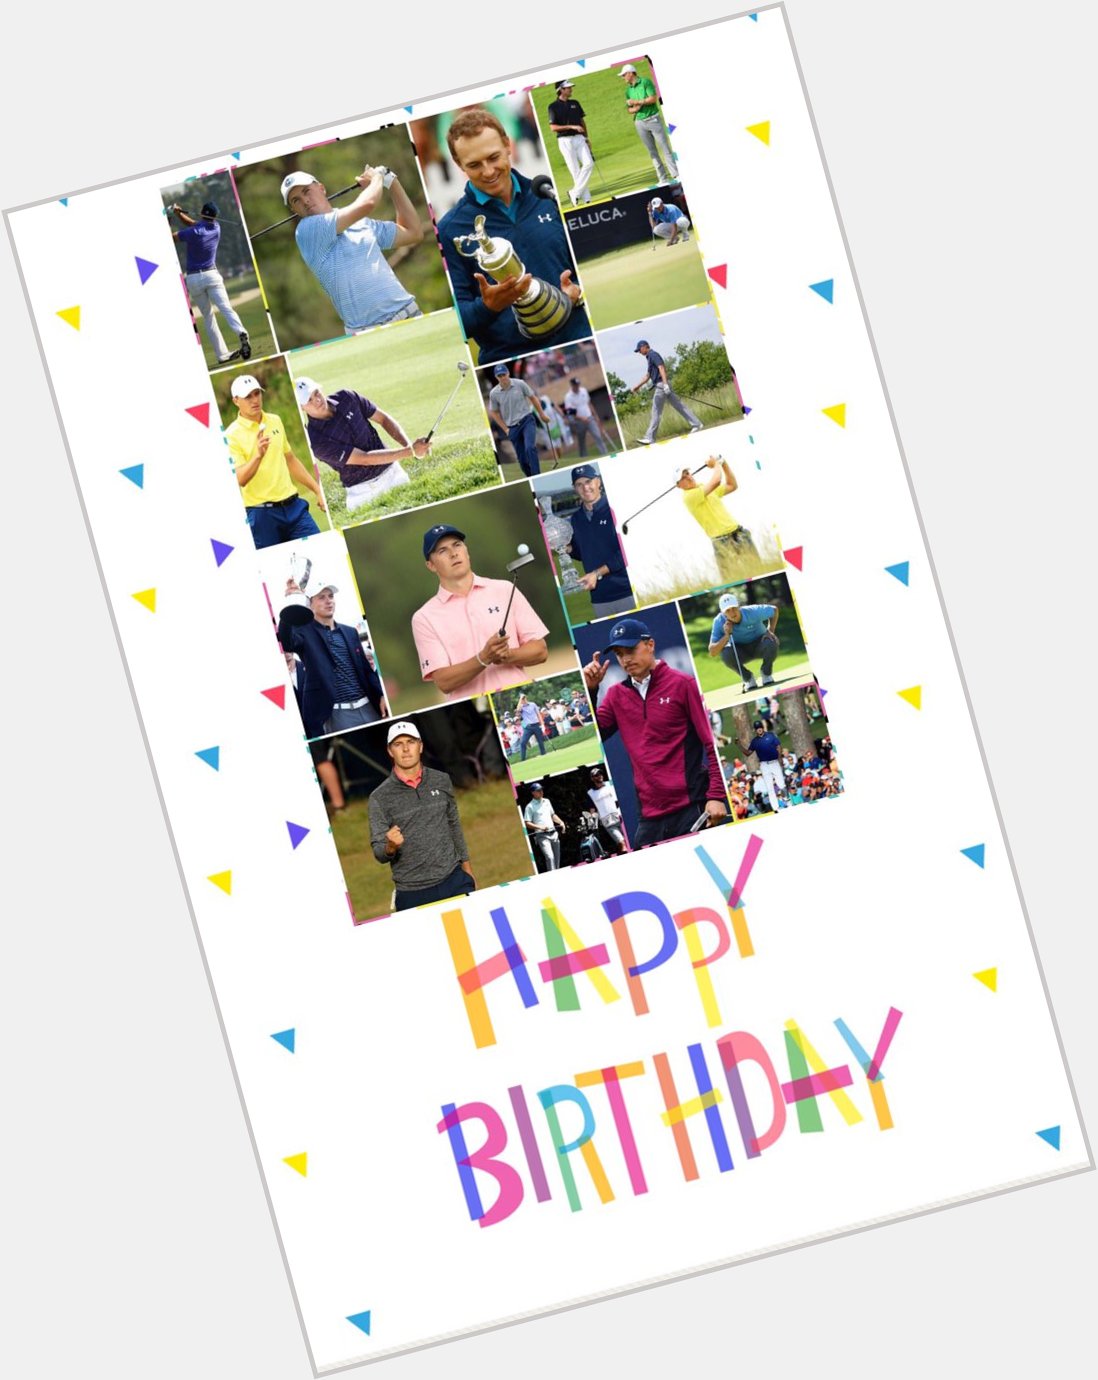 Happy Birthday to one of my favorite golfers, Jordan Spieth!!!  